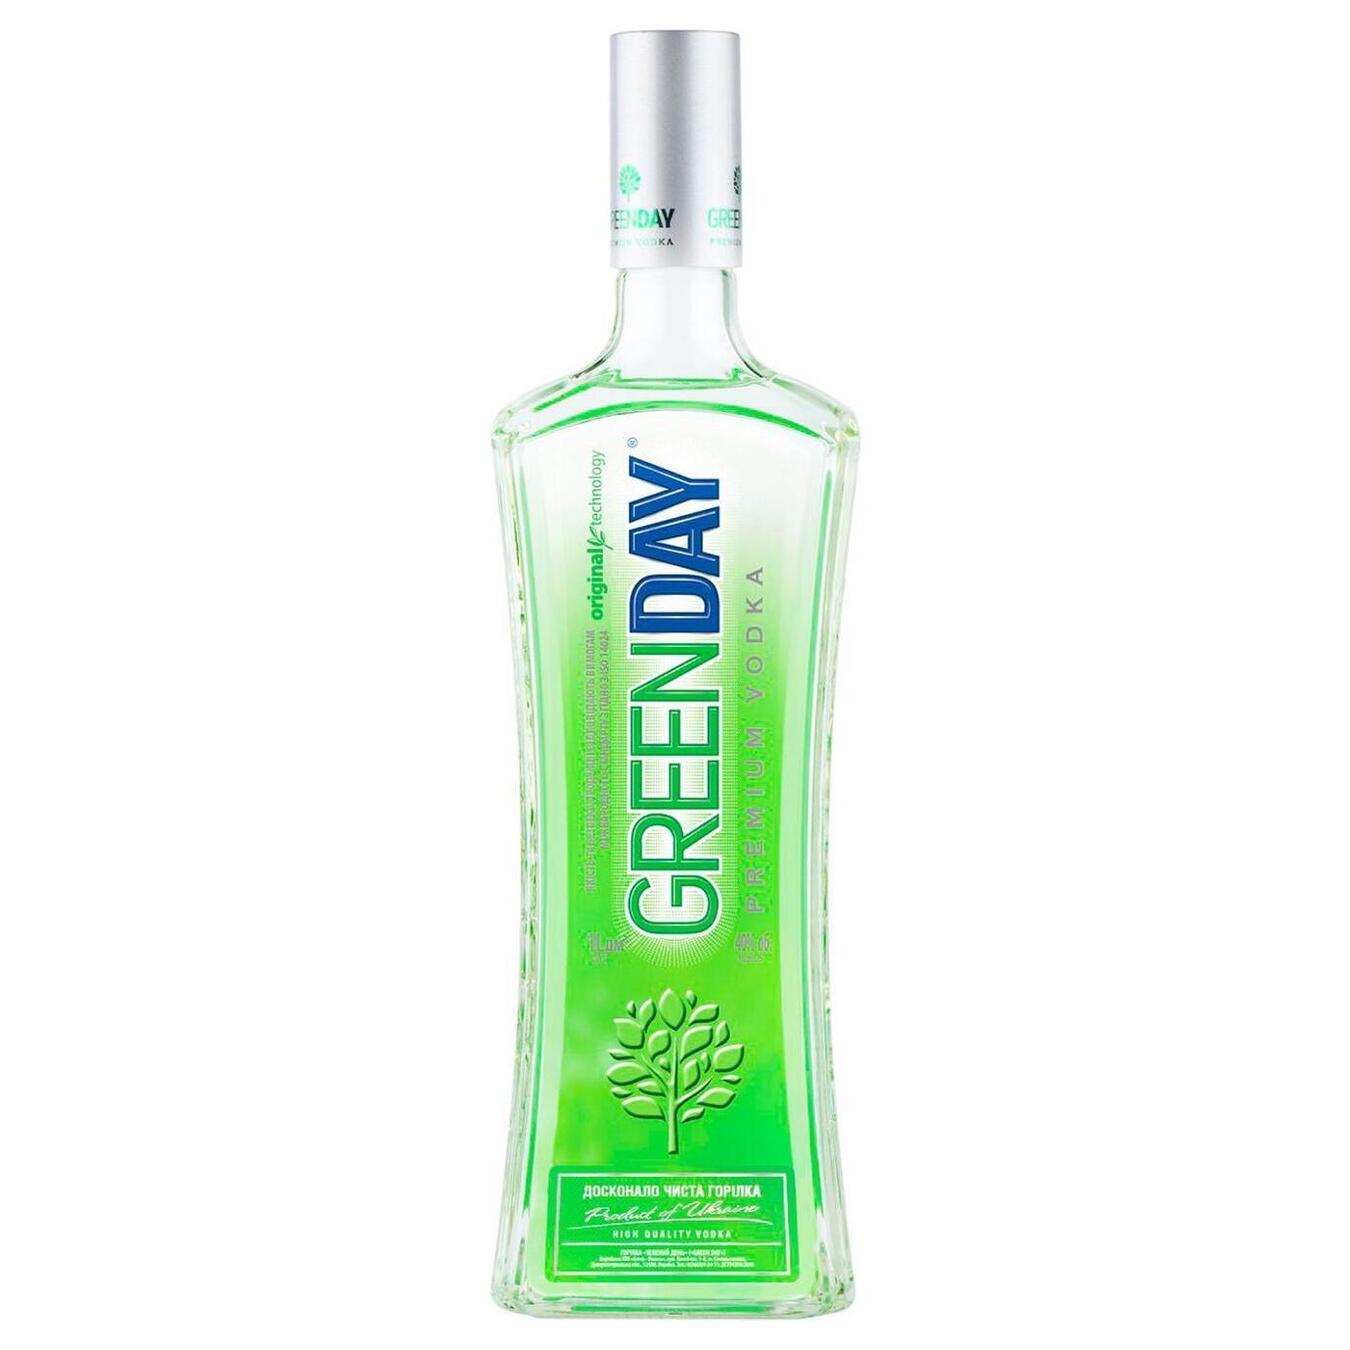 Green Day vodka 1l